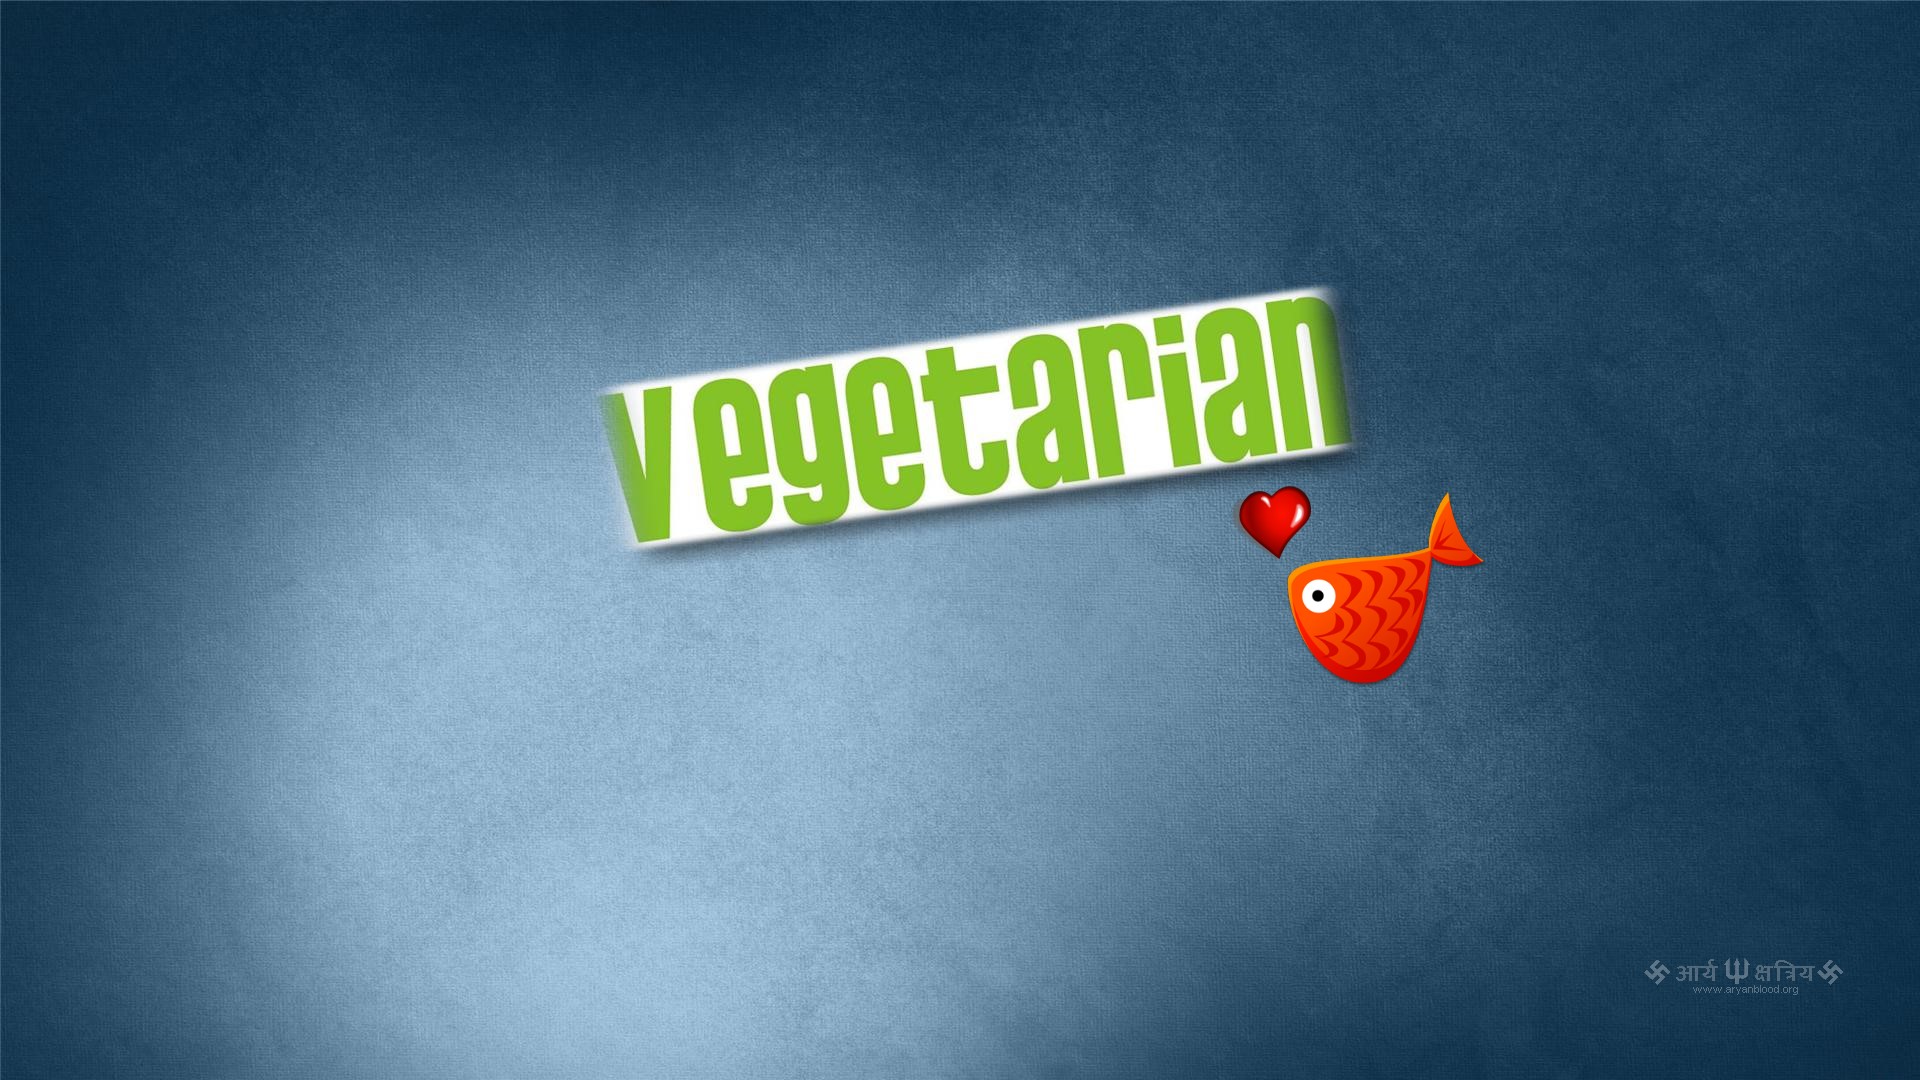 Best Vegetarian Desktop Background